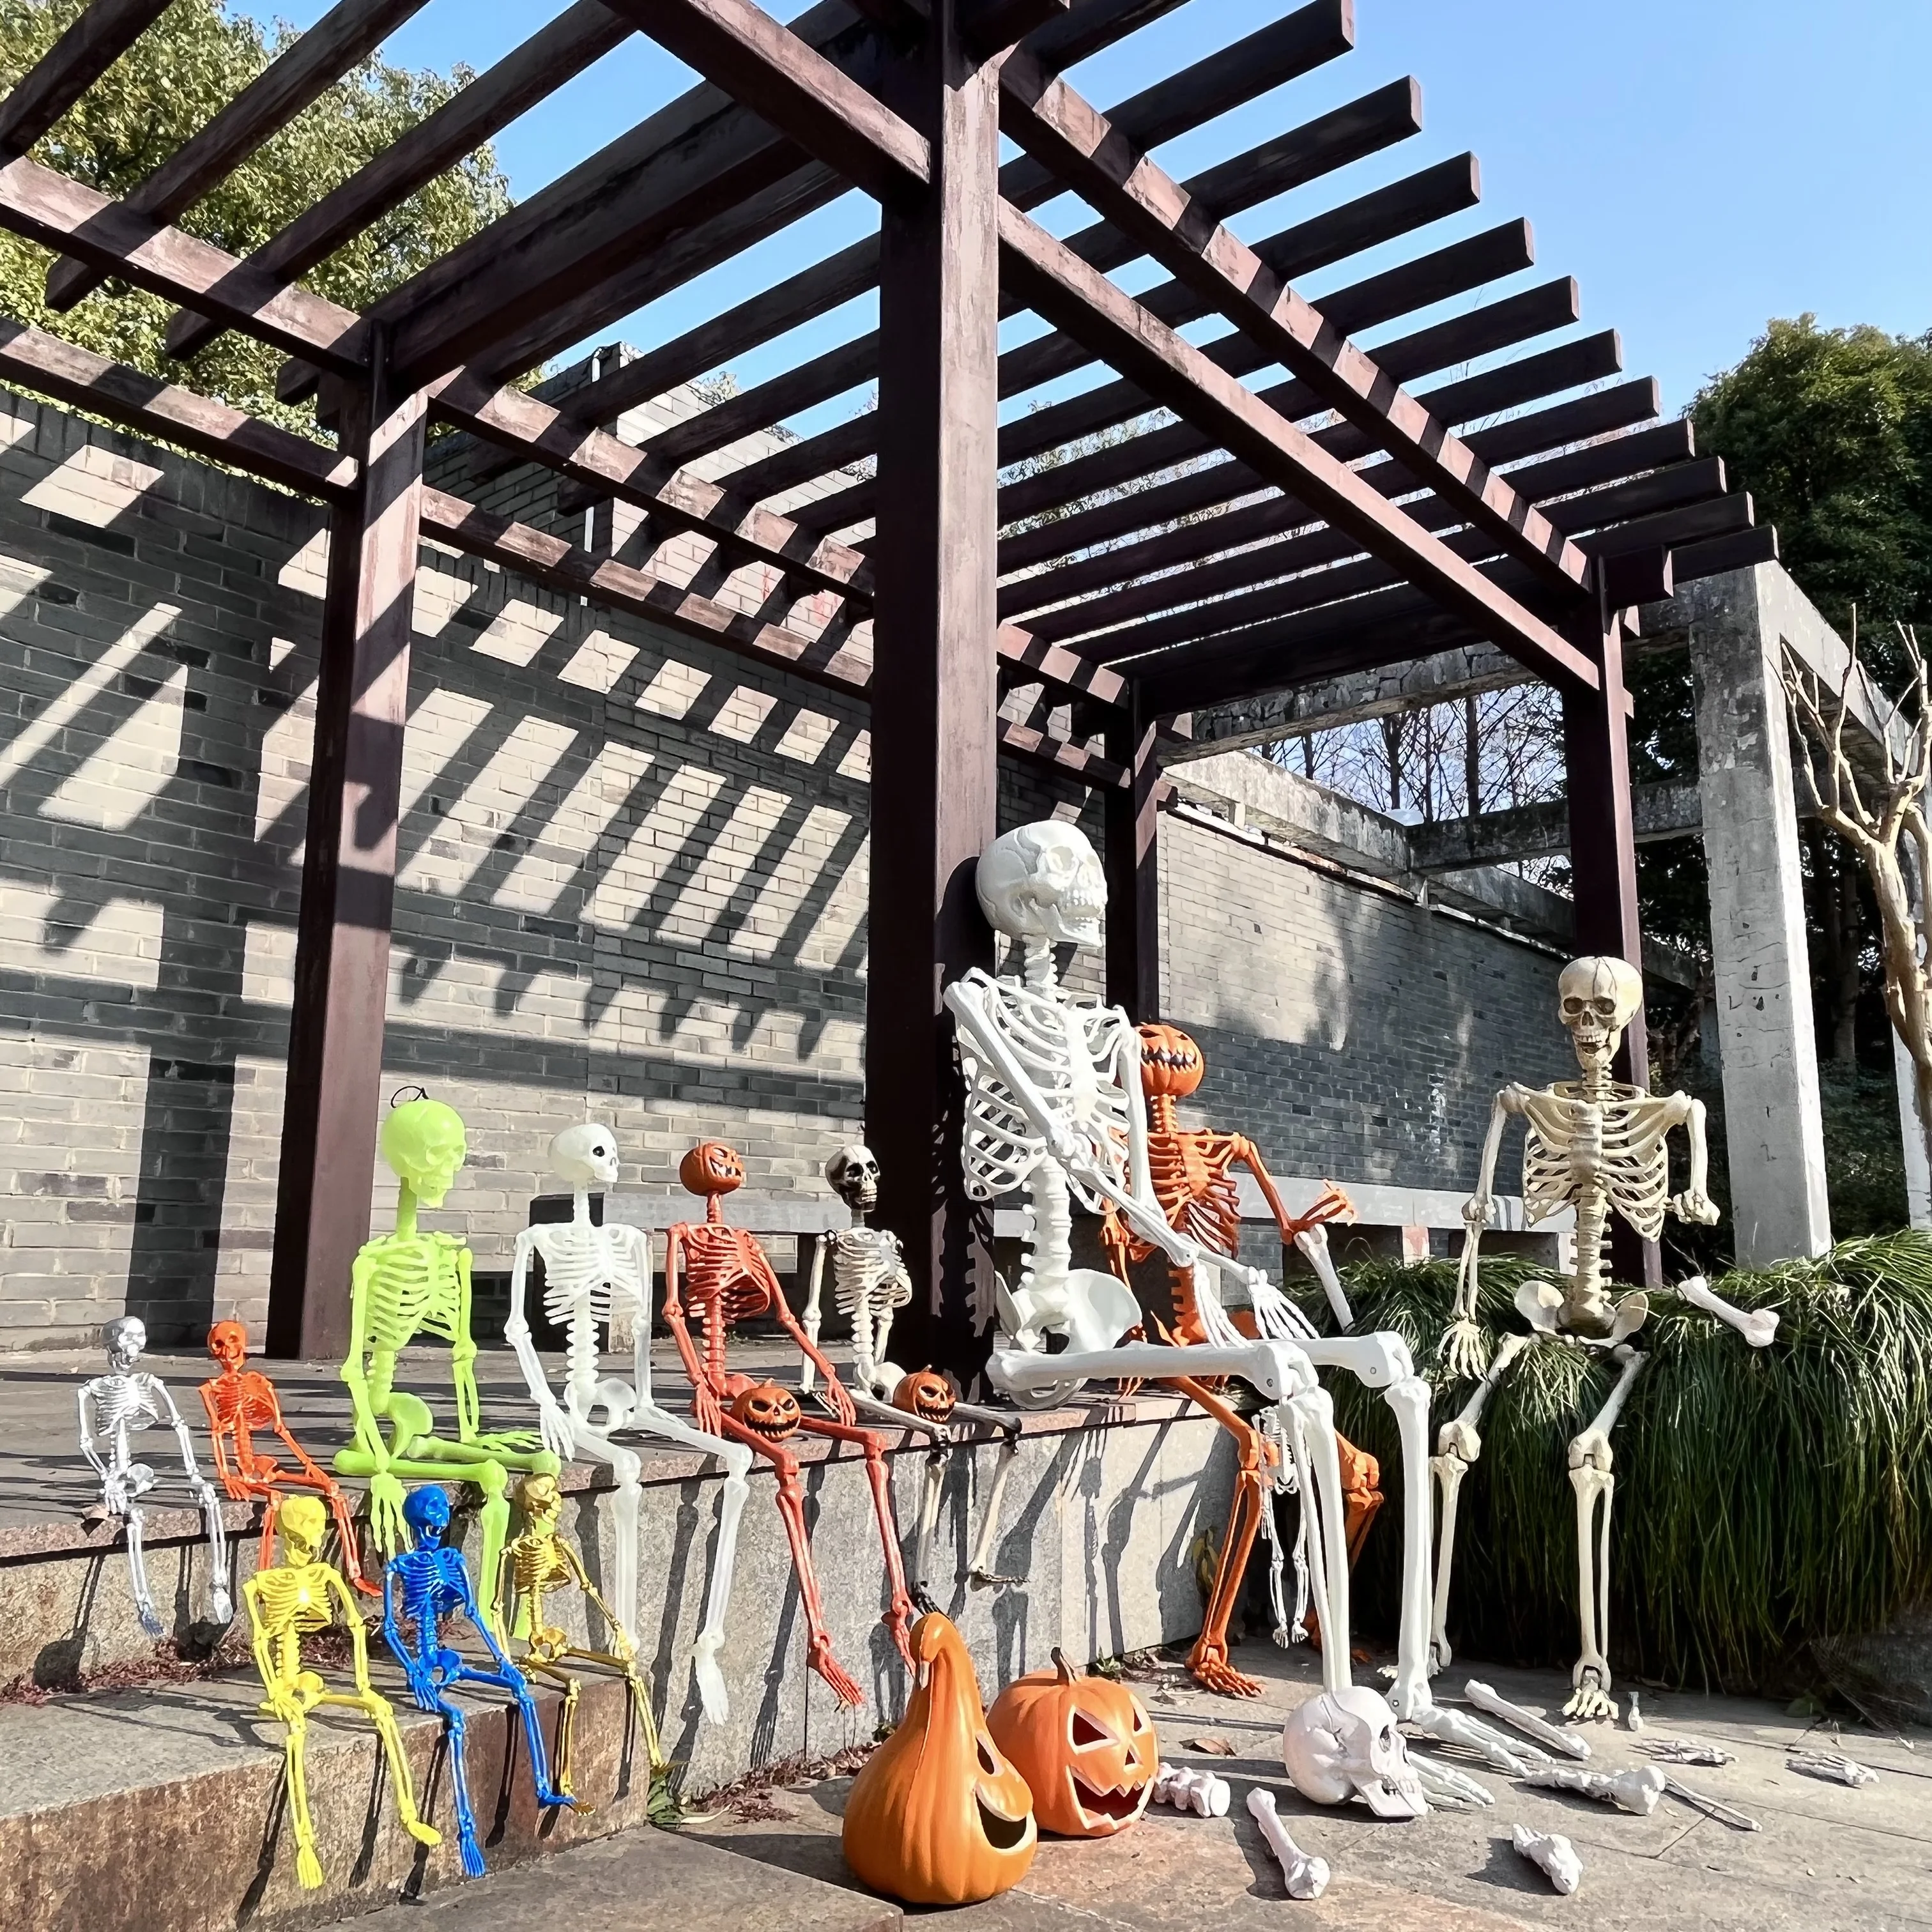 Halloween Supplier Full Body Accessories Indoor&Outdoor Human Halloween Skeletons For Holidays Decoration